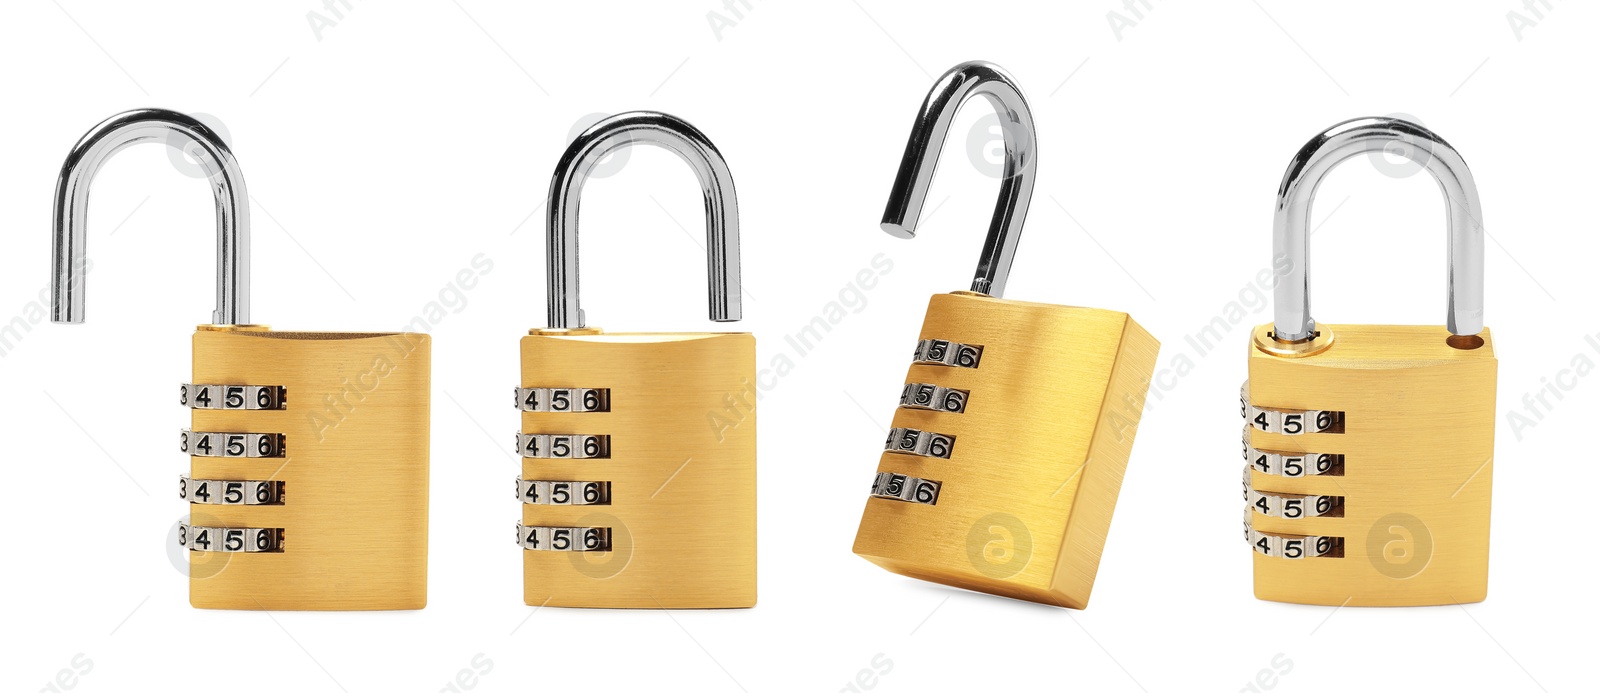 Image of Steel combination padlock isolated on white, set